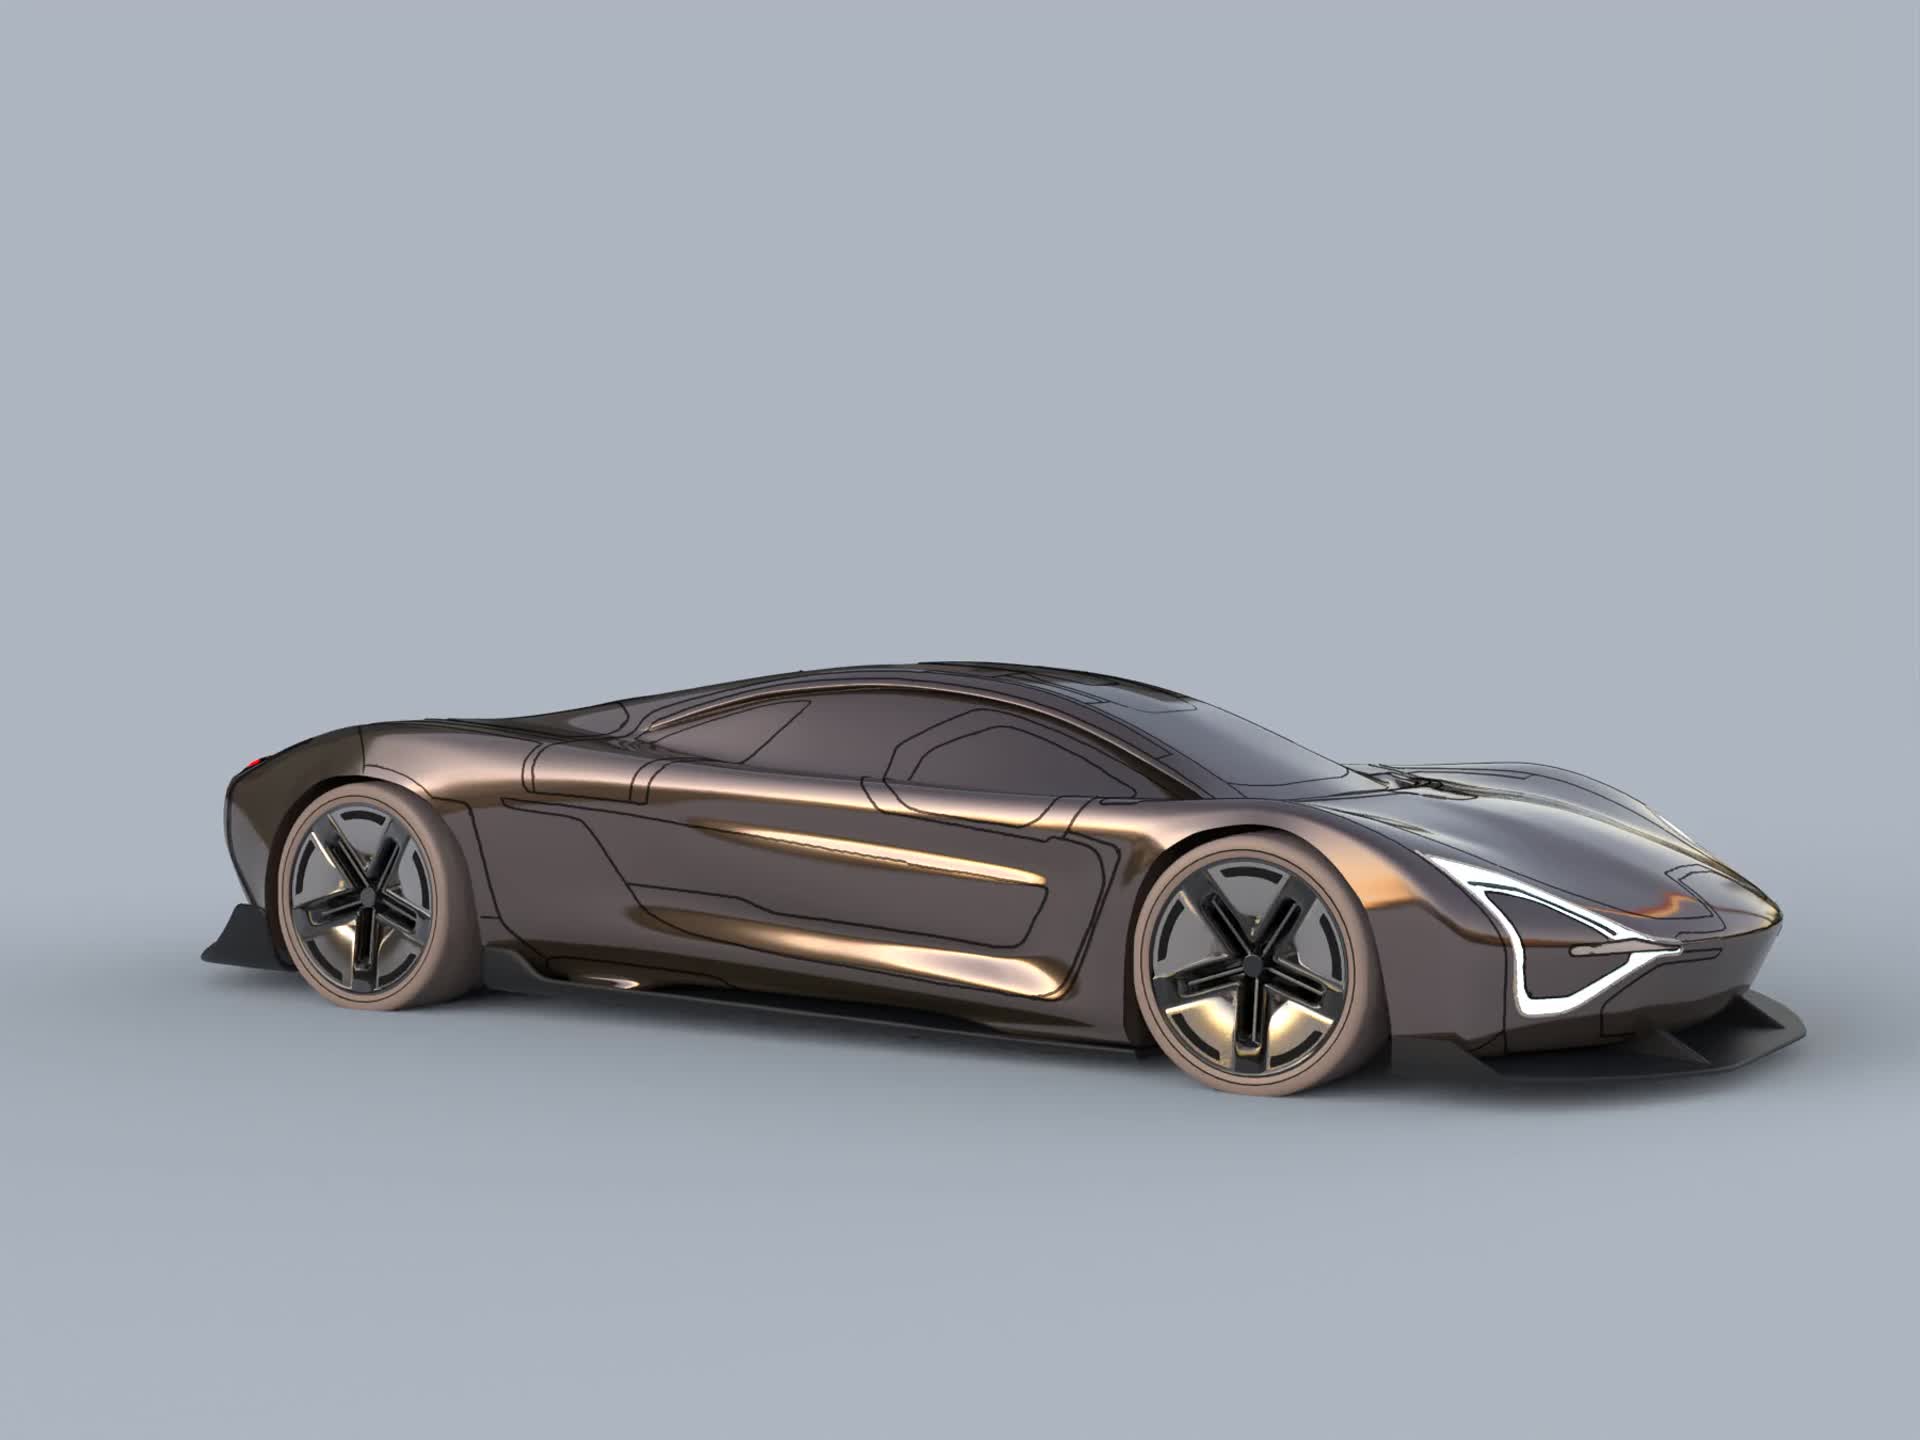 Arrinera supercar: new design sketches - Car Body Design